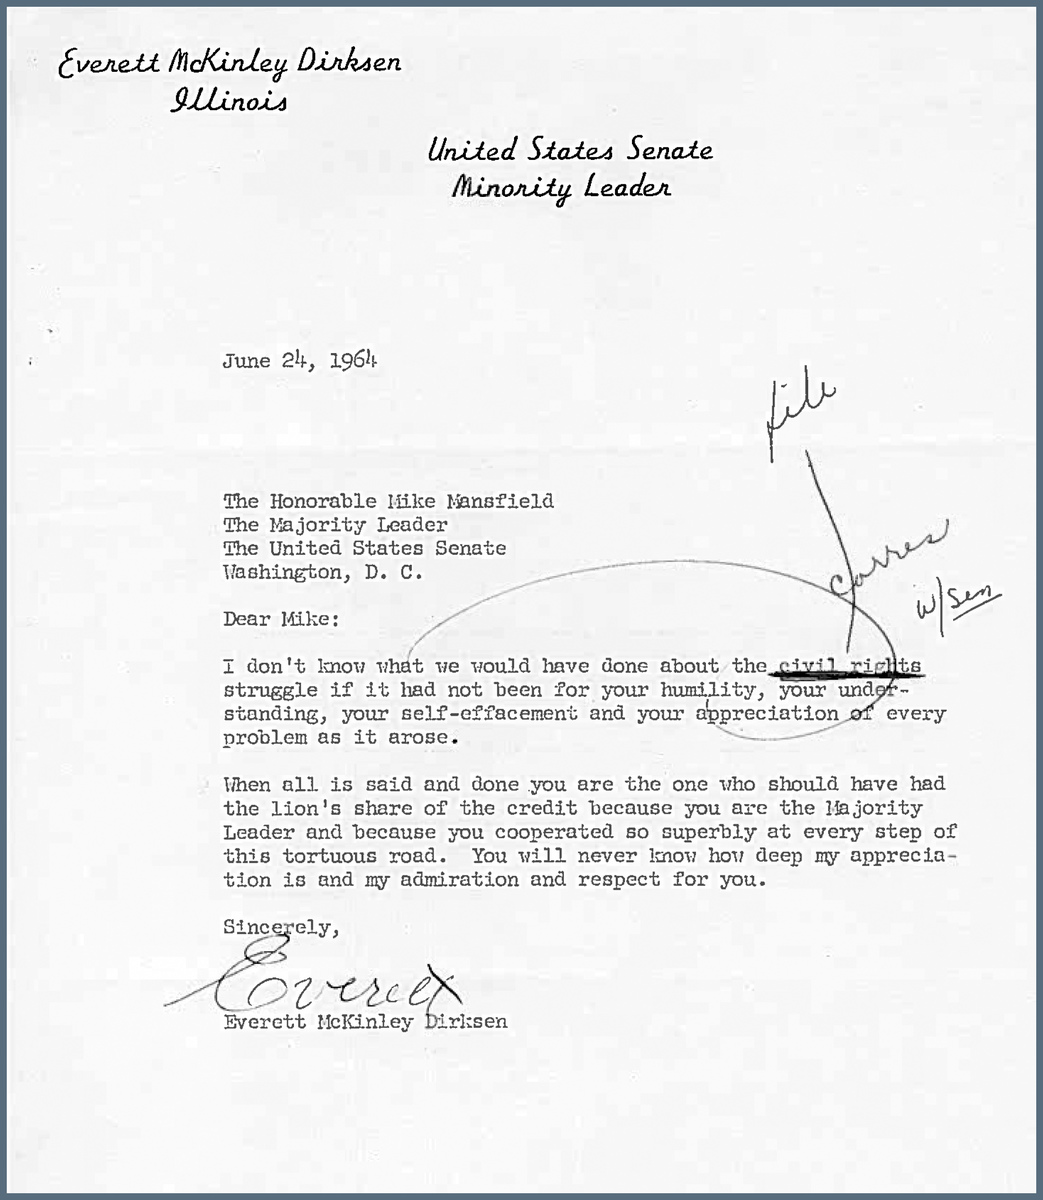 Senate Minority Leader Everett Dirksen’s letter about the Civil Rights Act